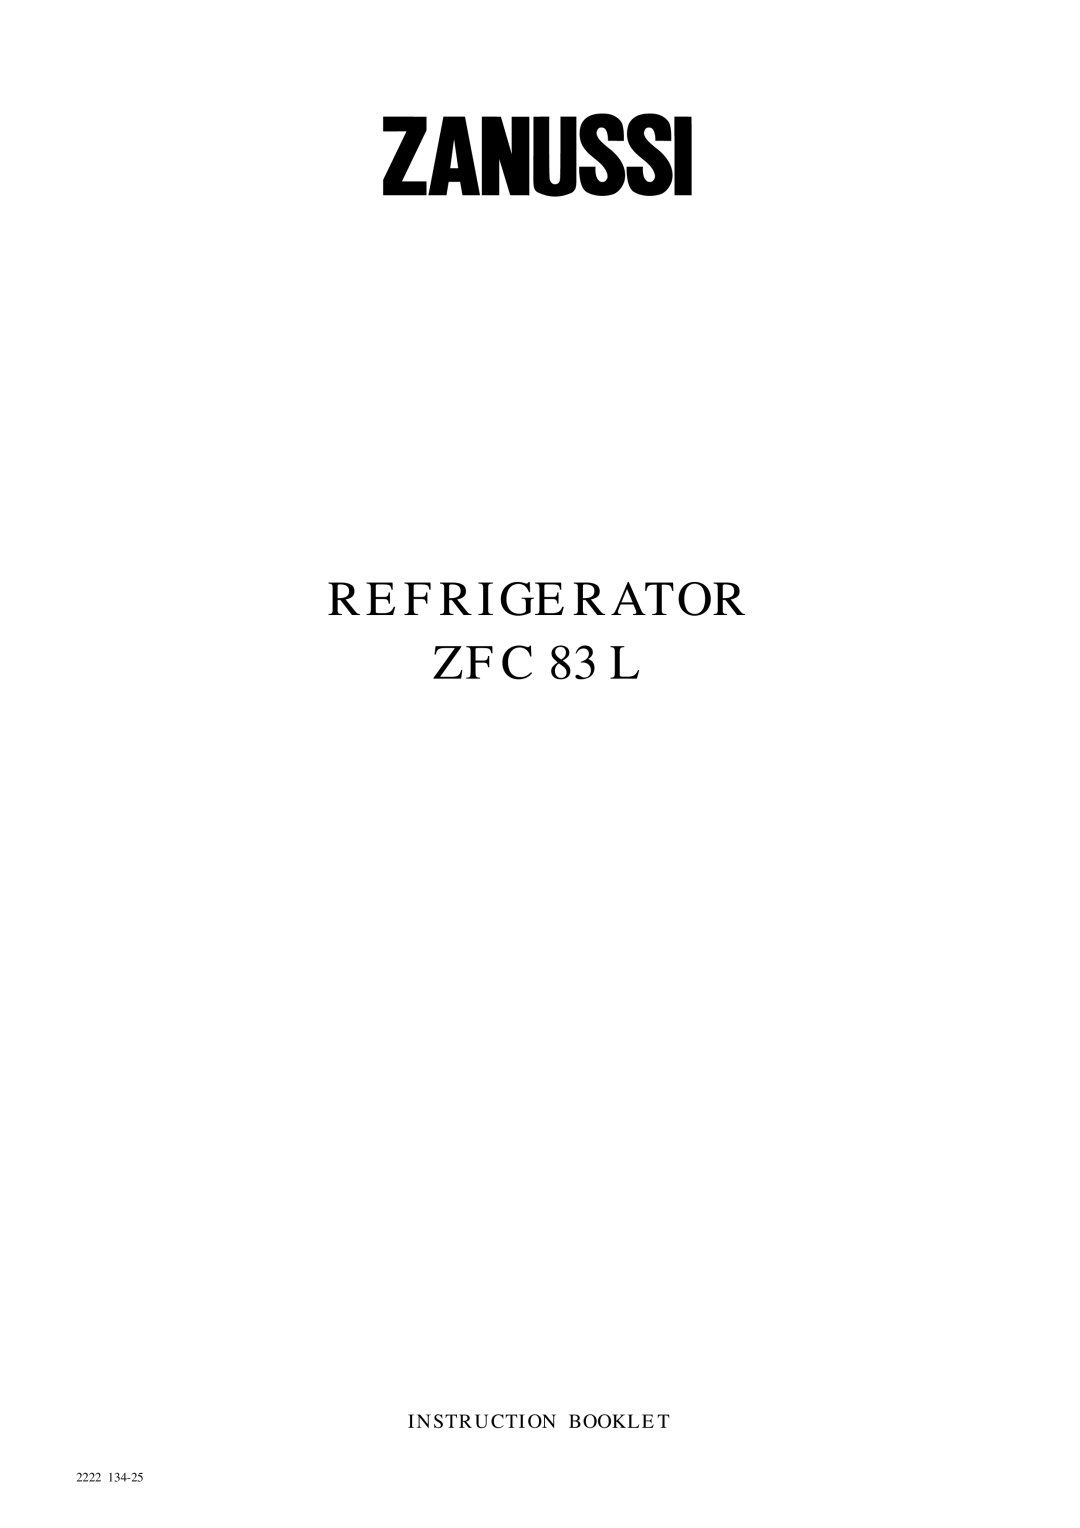 Zanussi manual REFRIGERATOR ZFC 83 L, Instruction Booklet, 2222 